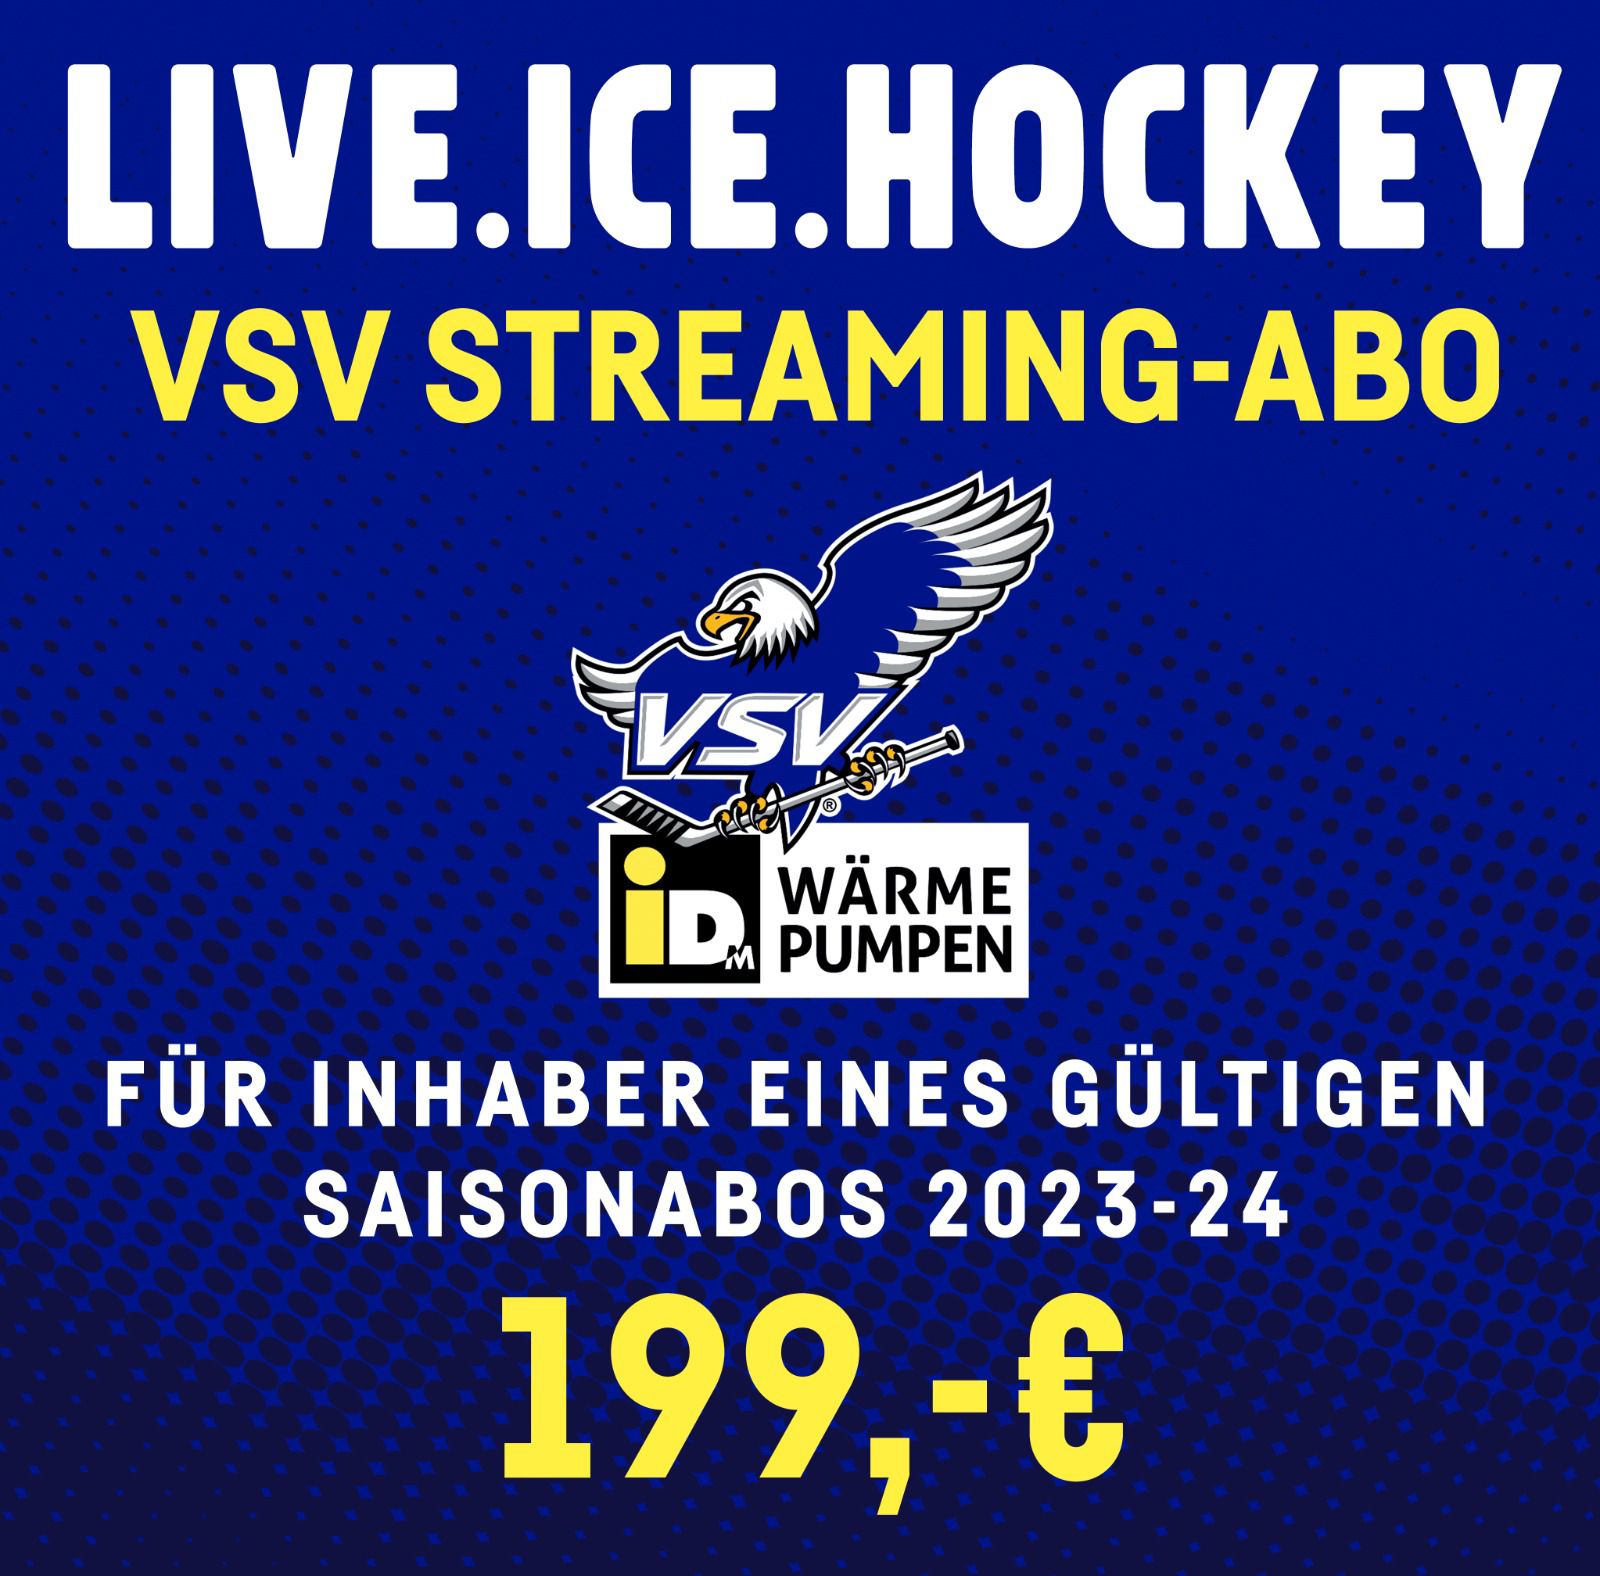 ice hockey league live stream